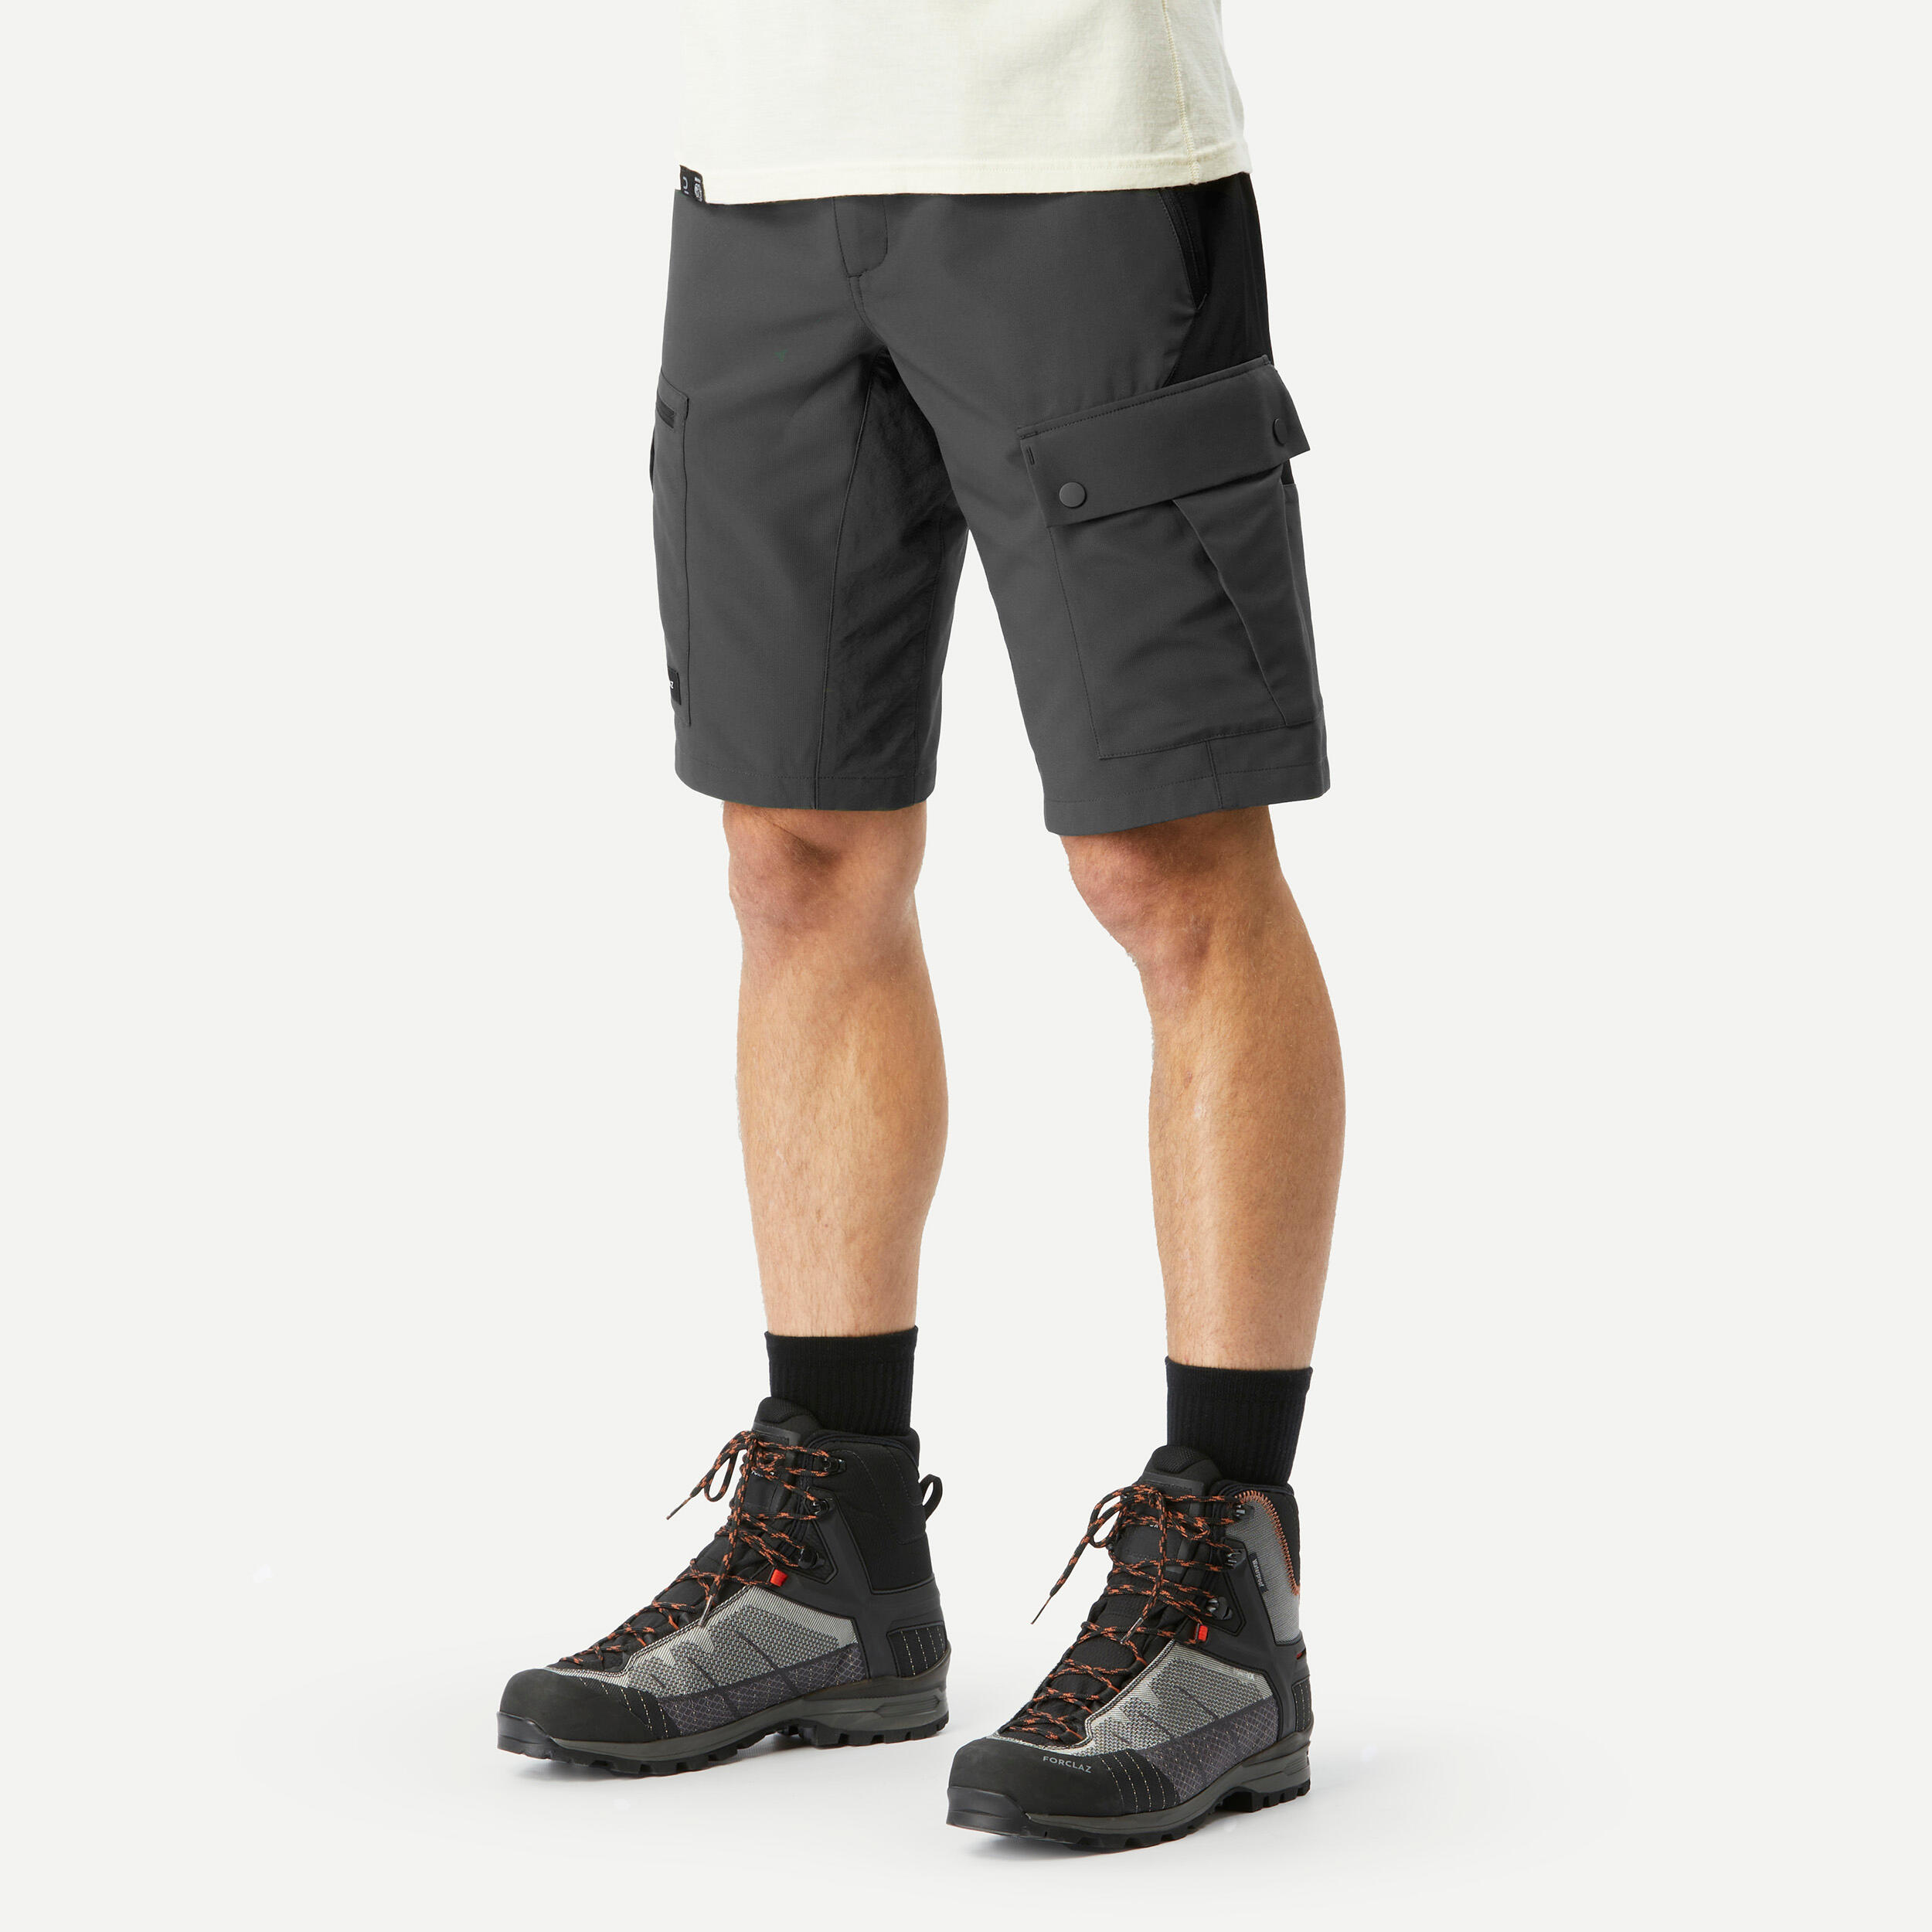 Men's Hiking Shorts - MT 500 - Carbon grey, Black - Forclaz - Decathlon